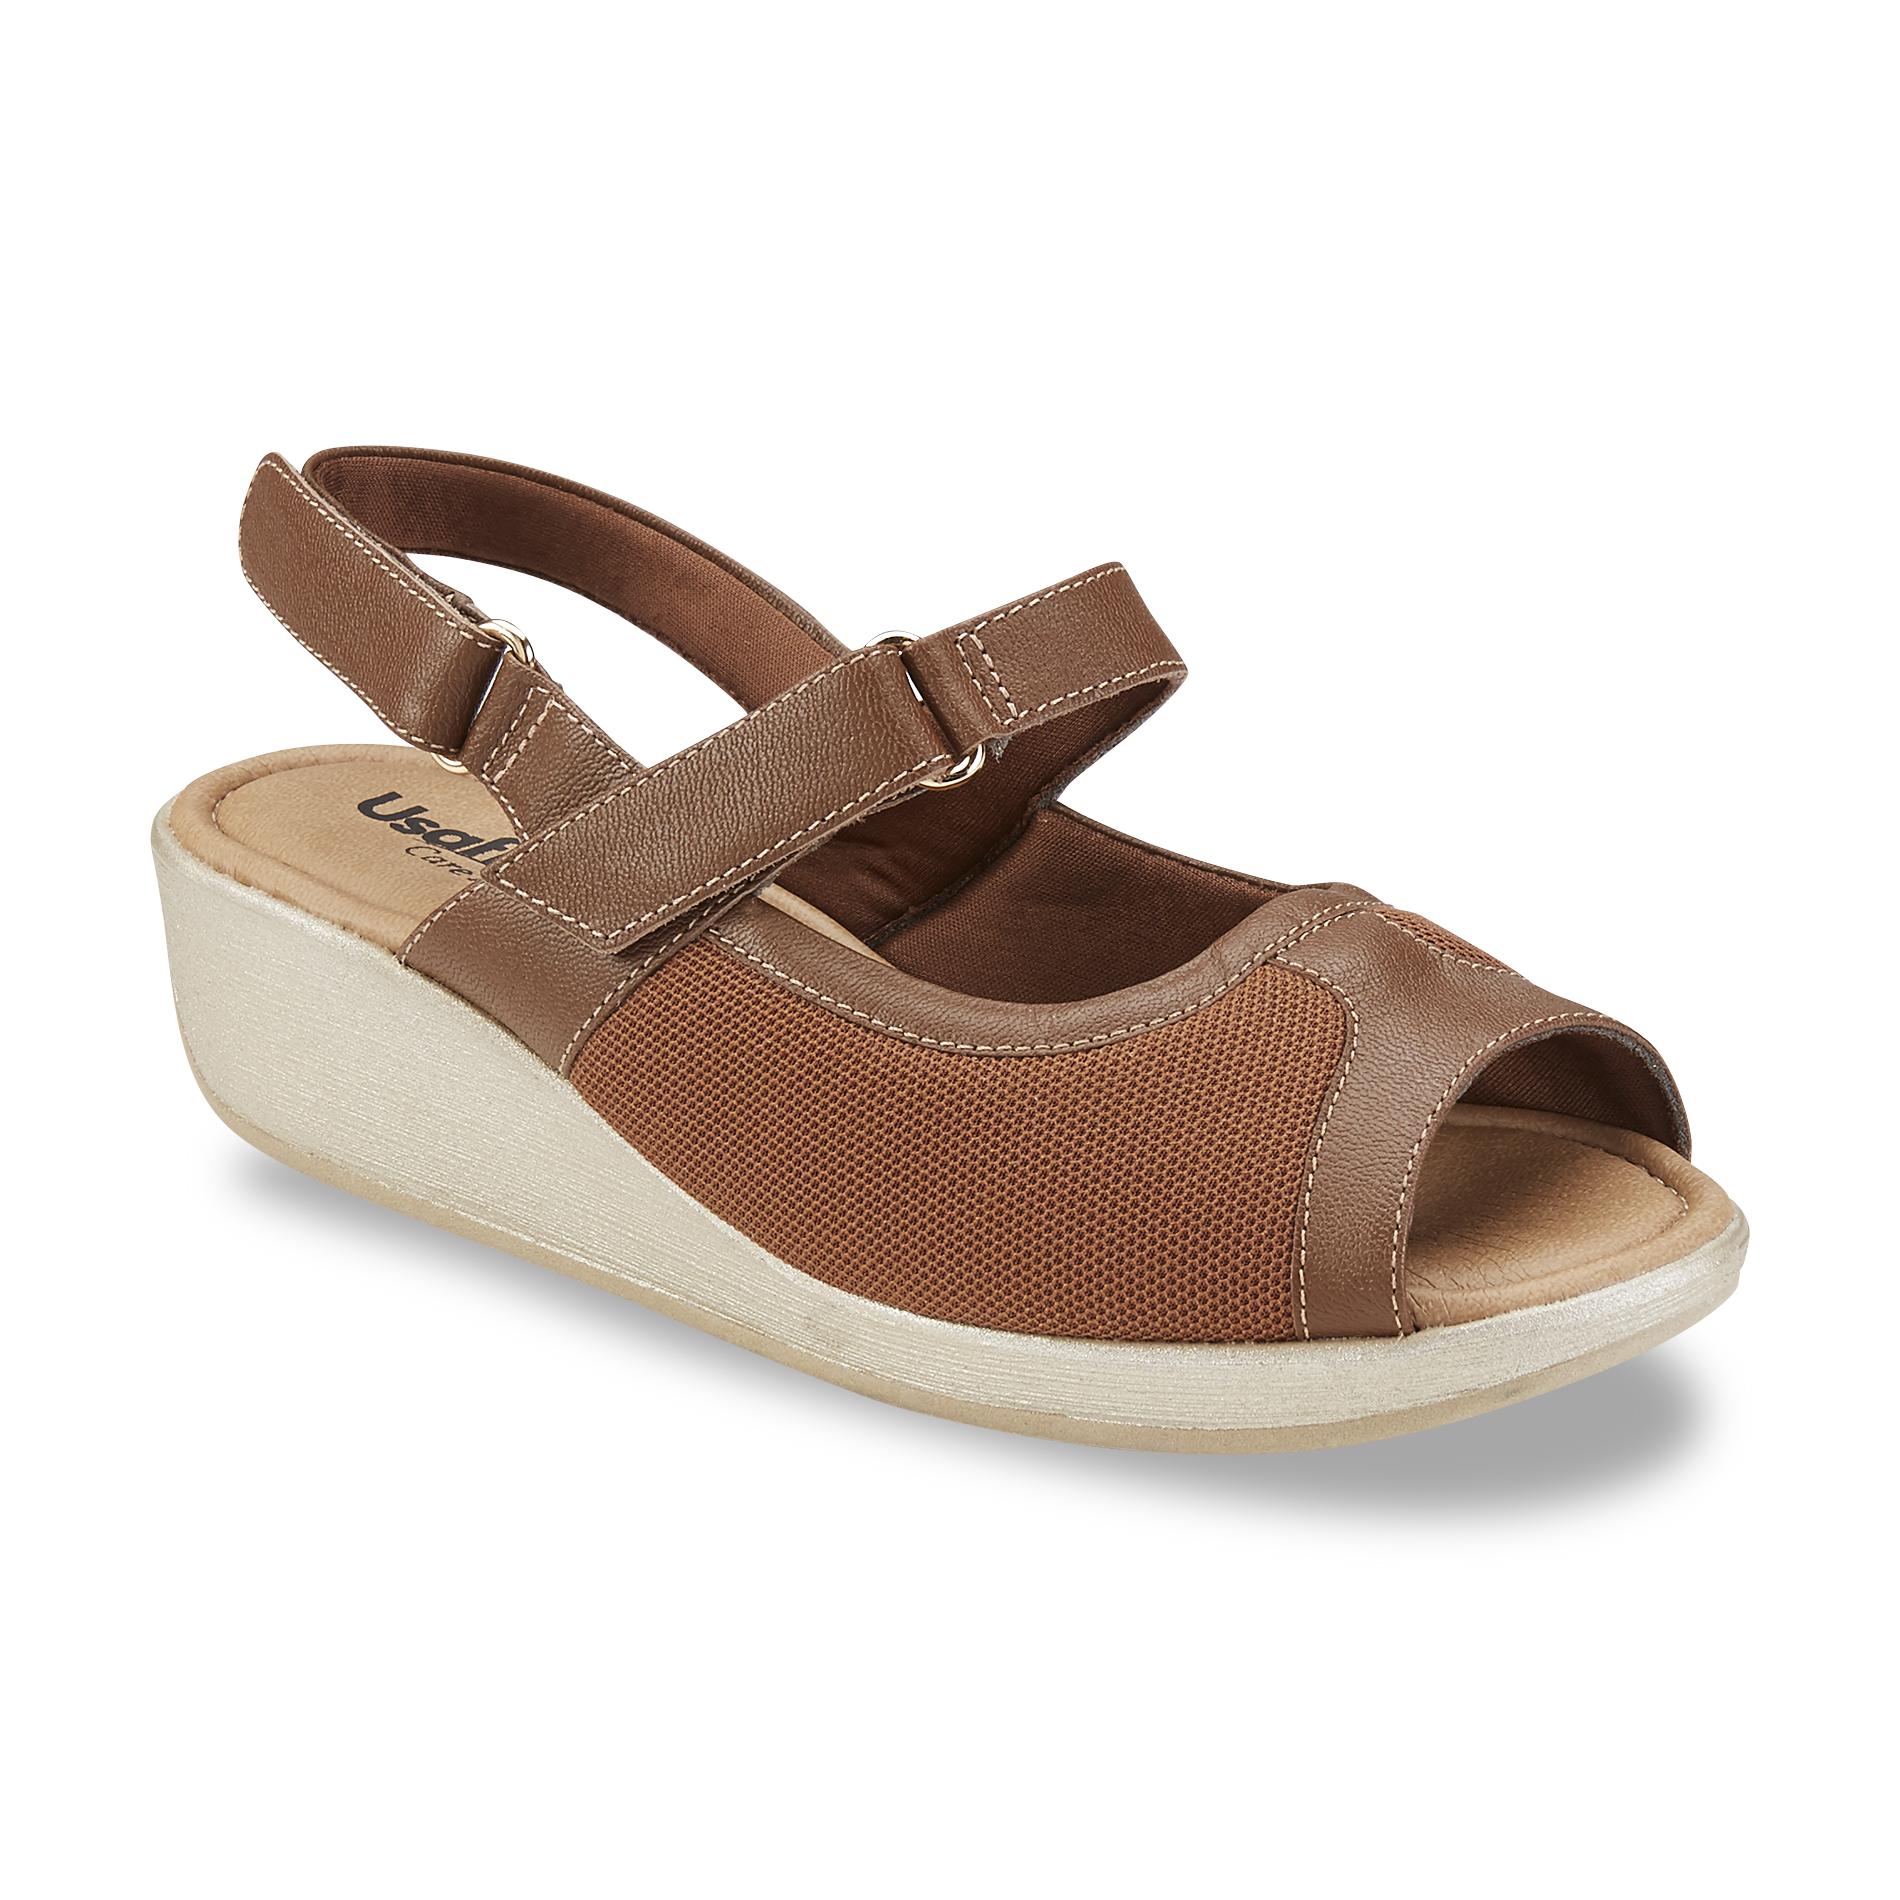 Usaflex Women's Micaela Leather/Fabric Bunion Comfort Wedge Sandal - Brown